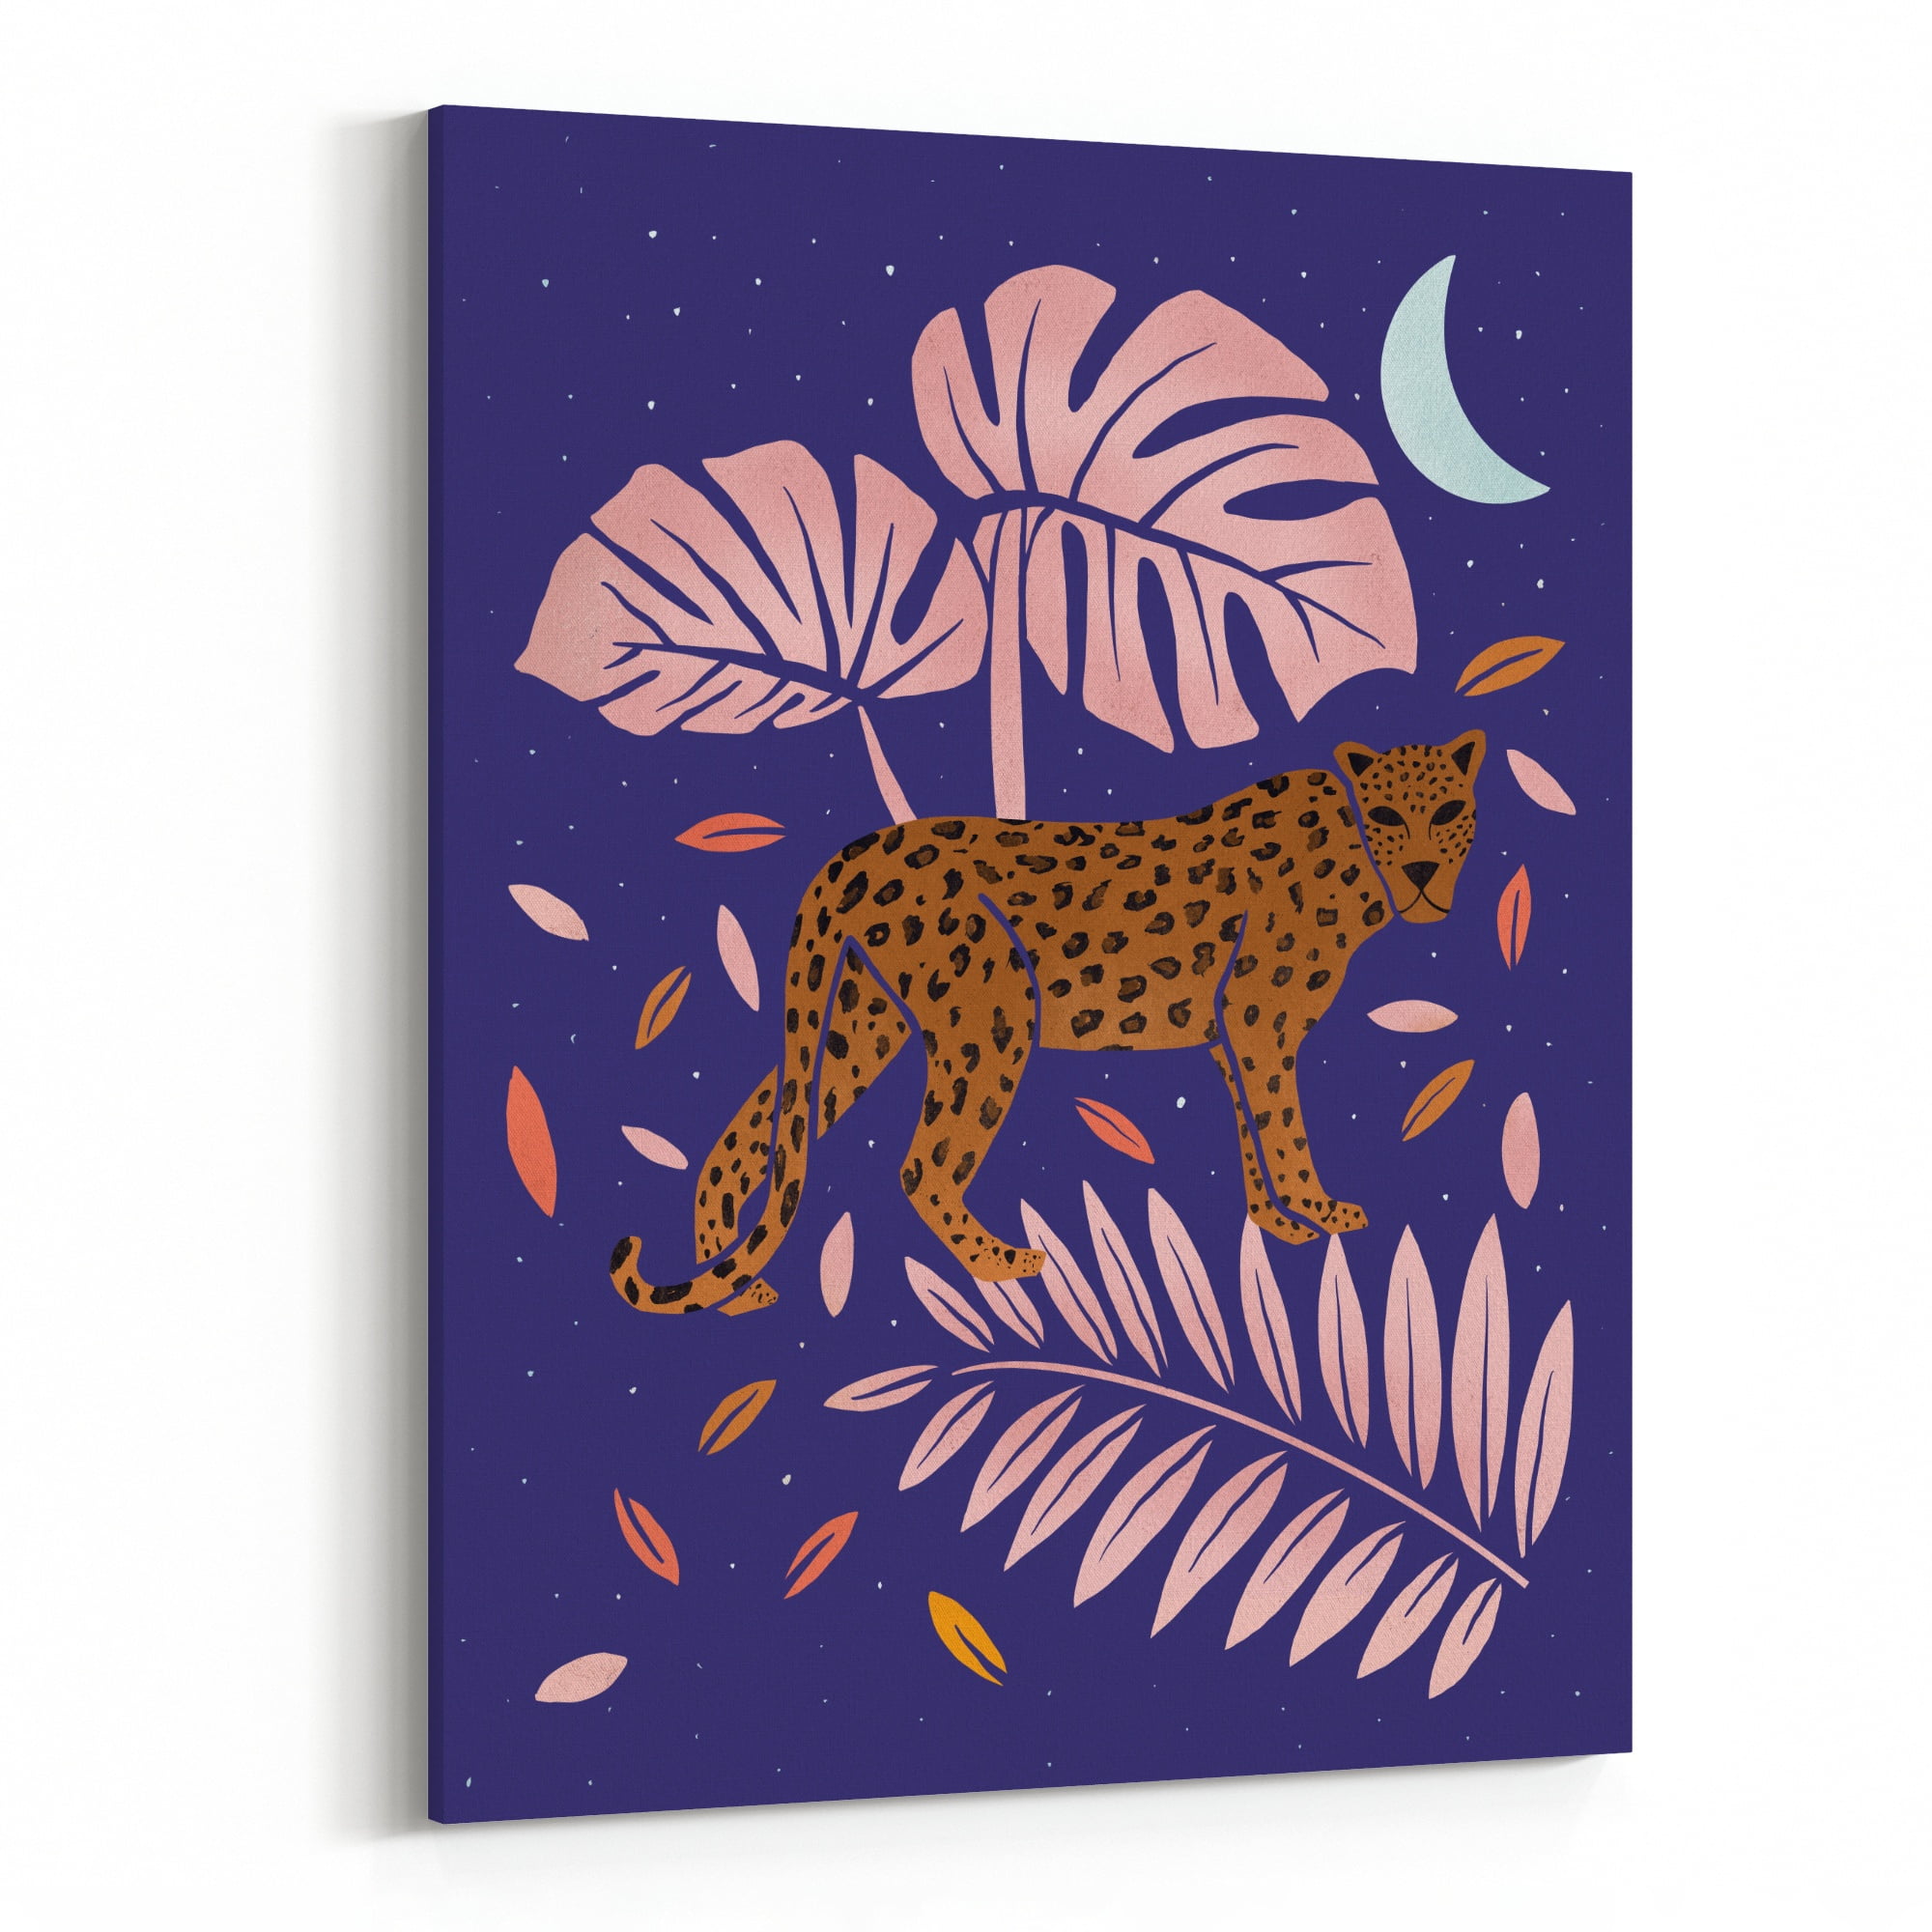 Cheetah Art Print Botanical Illustration Tropical Art Leopard Art Print Safari nursery decor Blush pink wall art Jungle Cat Print